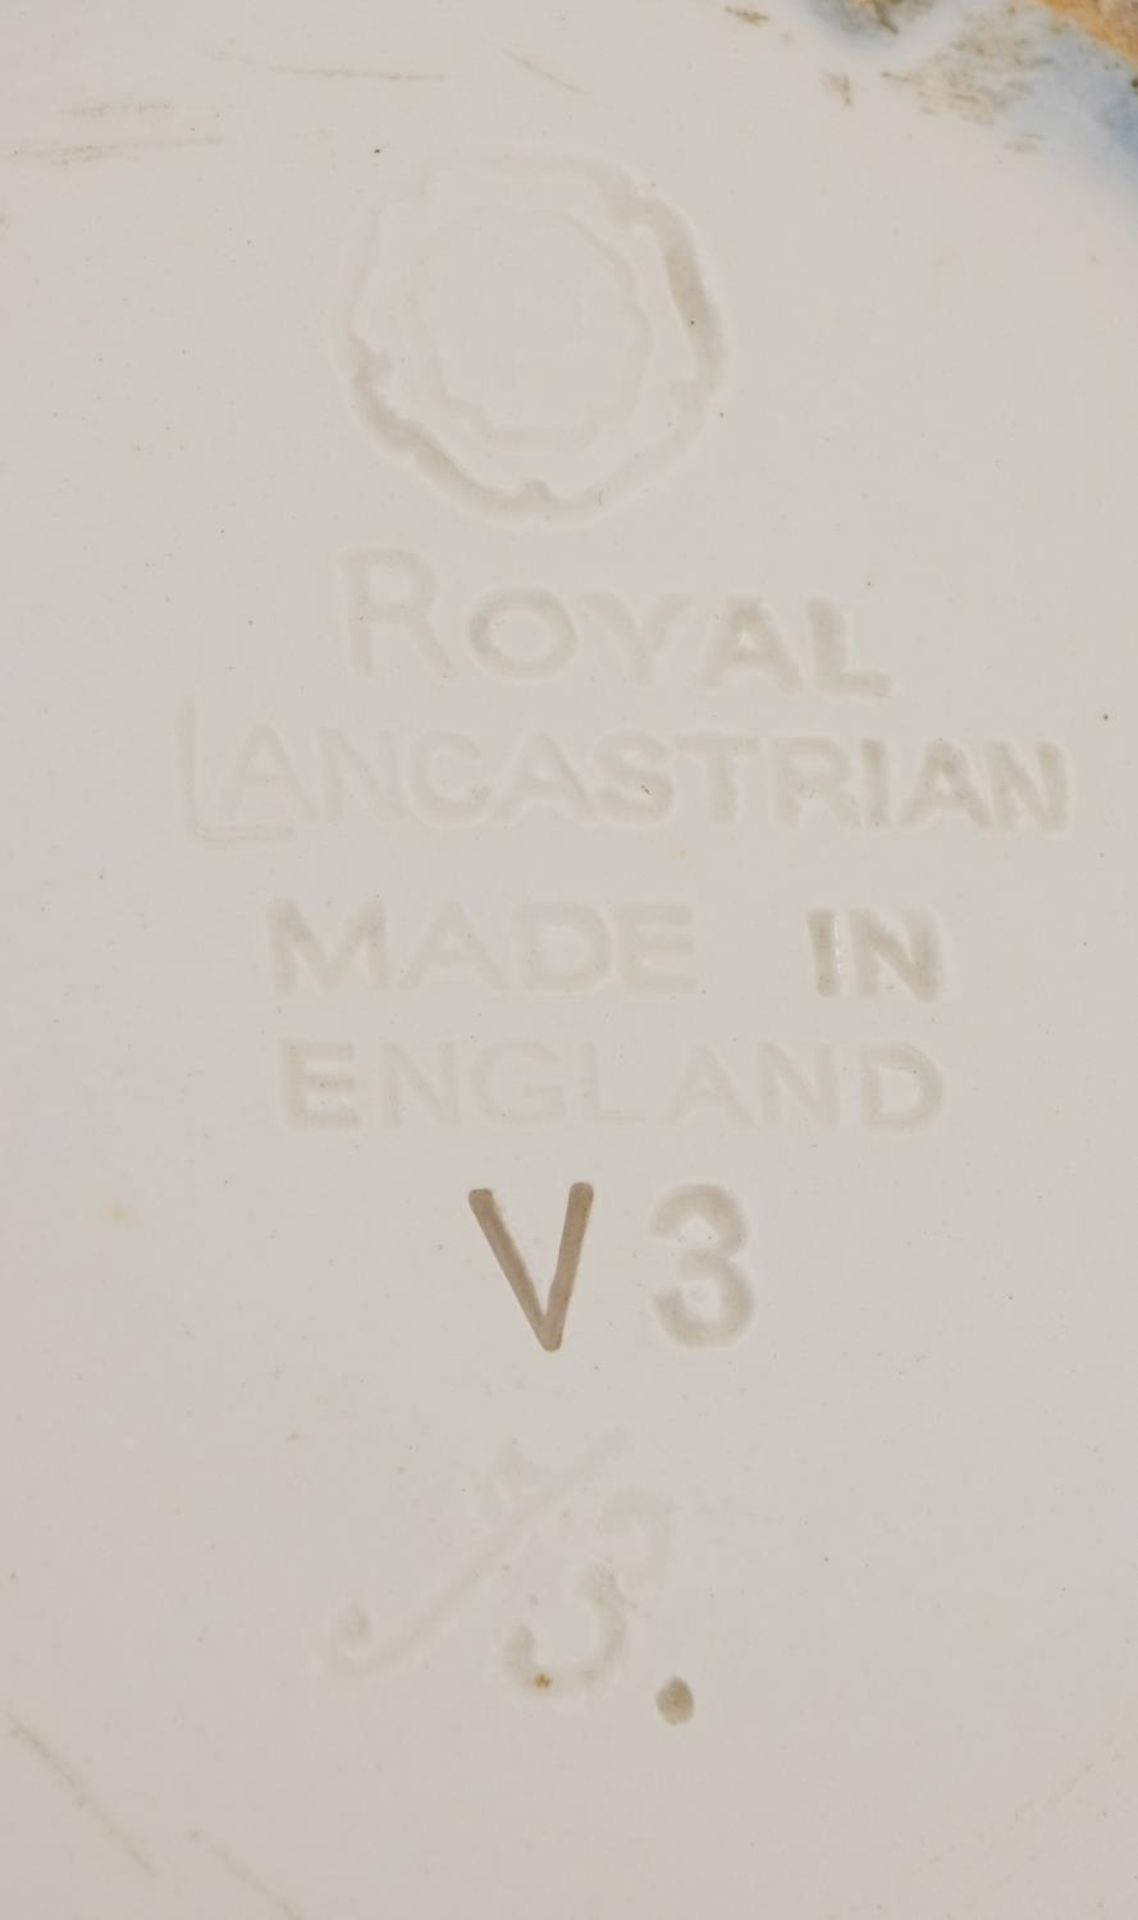 Pilkington's Royal Lancastrian vase having a mottled blue dripping glaze, impressed V3 to the - Image 4 of 4